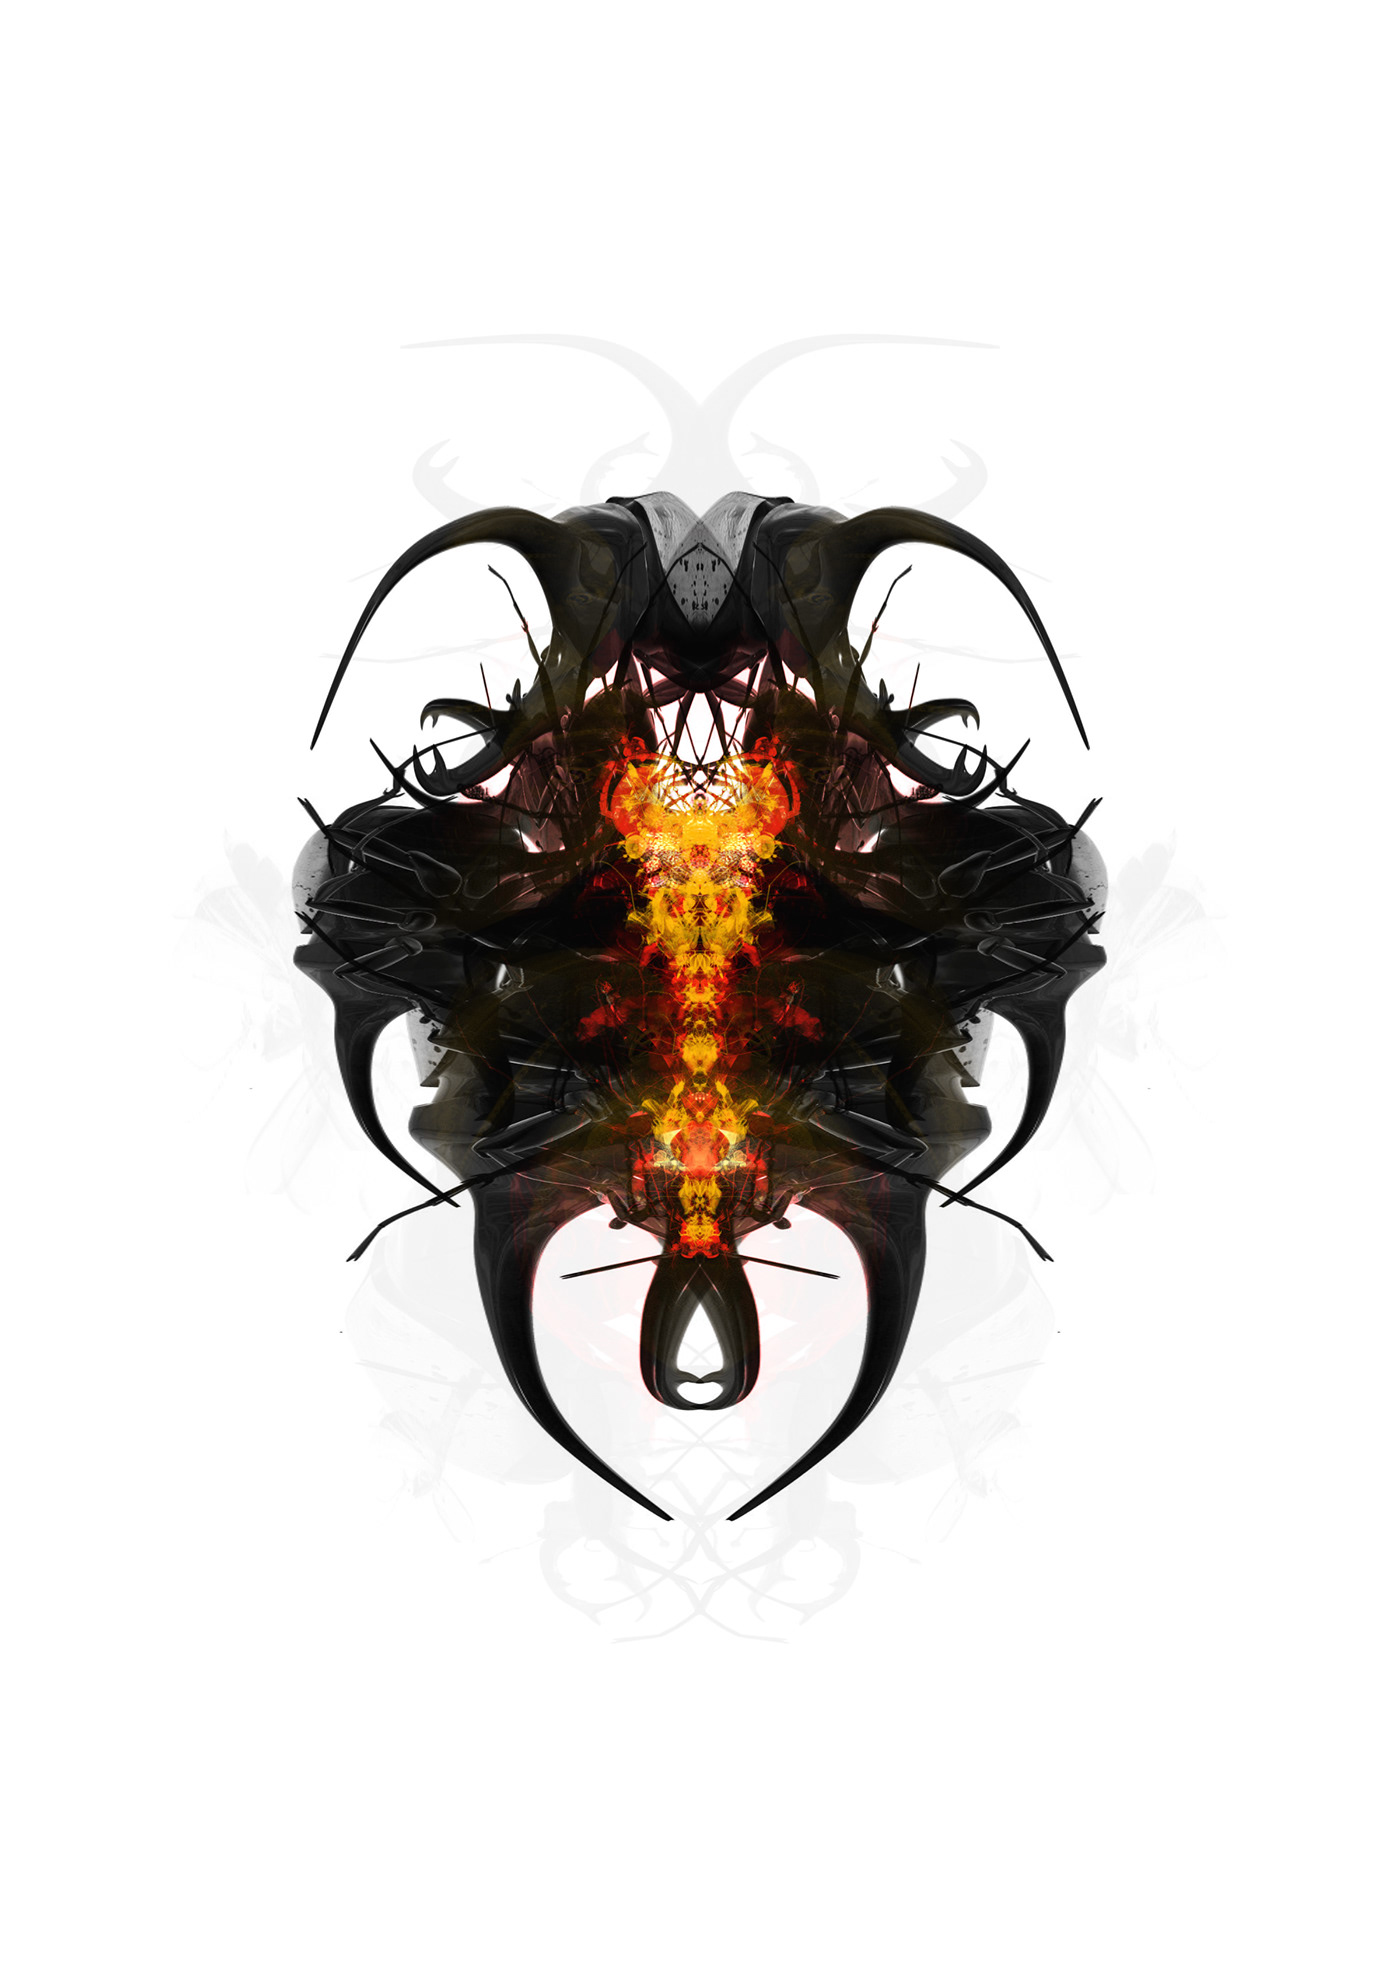 biology biomimicry design art graphic molecular morph symmetry code generative